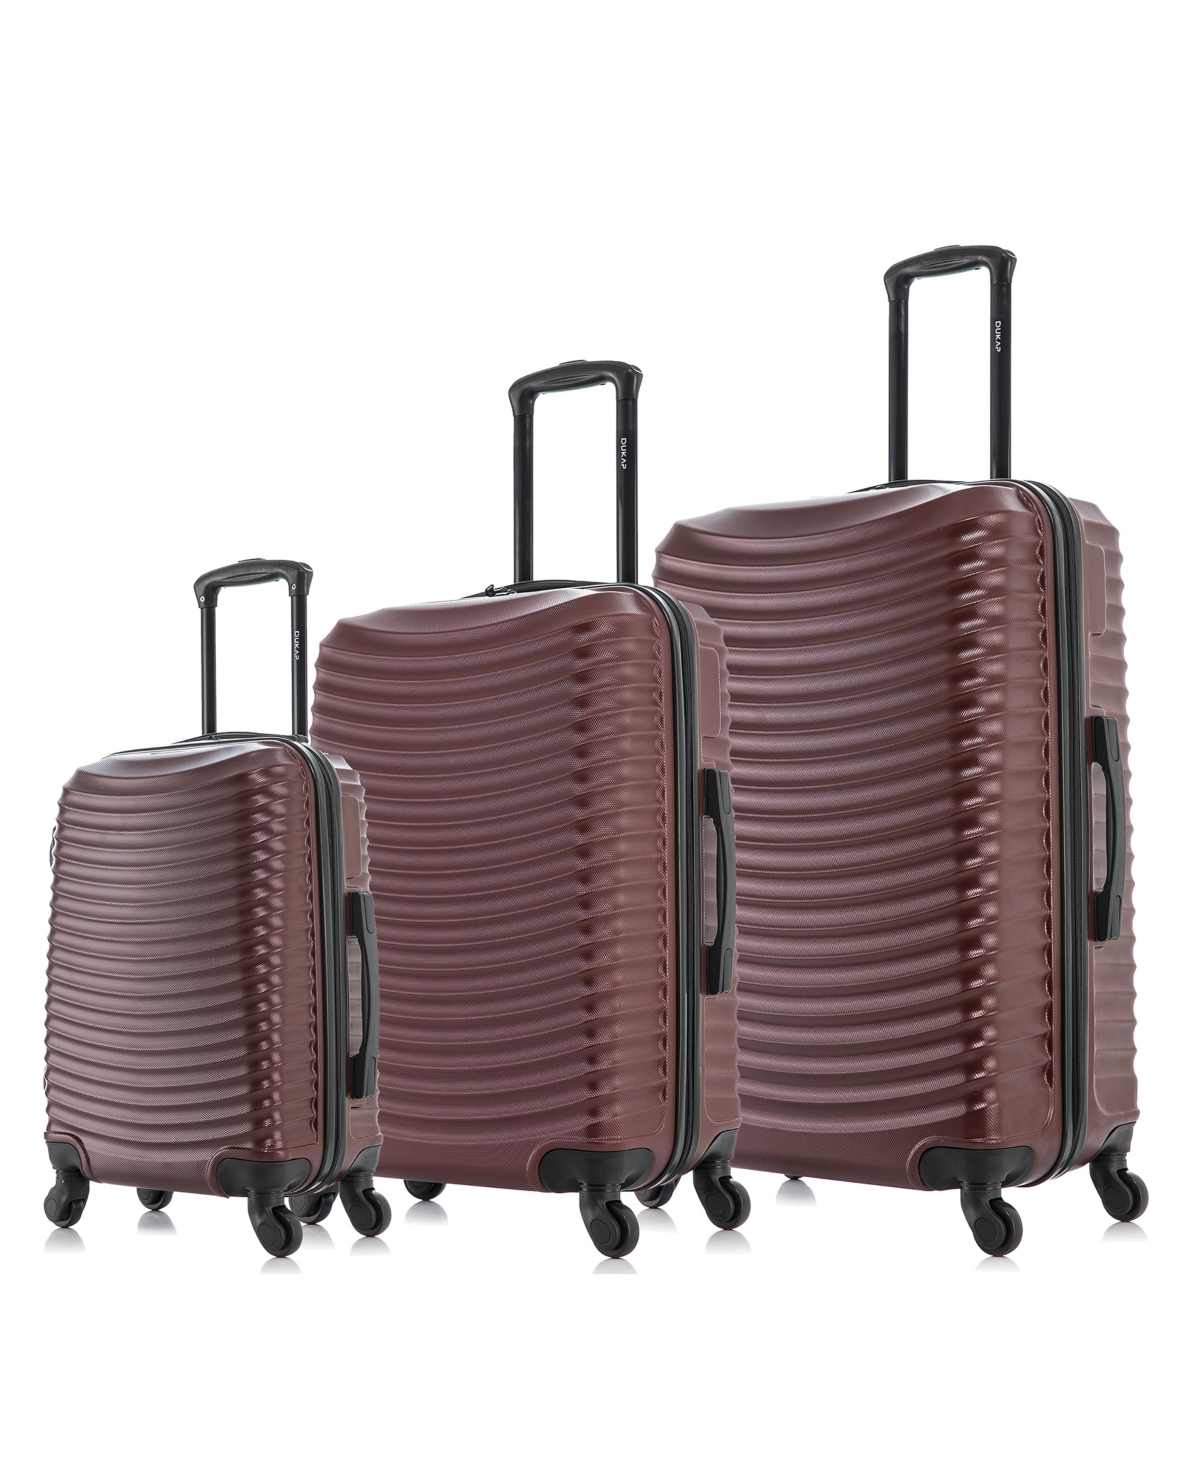 InUSA Adly Lightweight Hardside Spinner Luggage Set, 3 piece - White